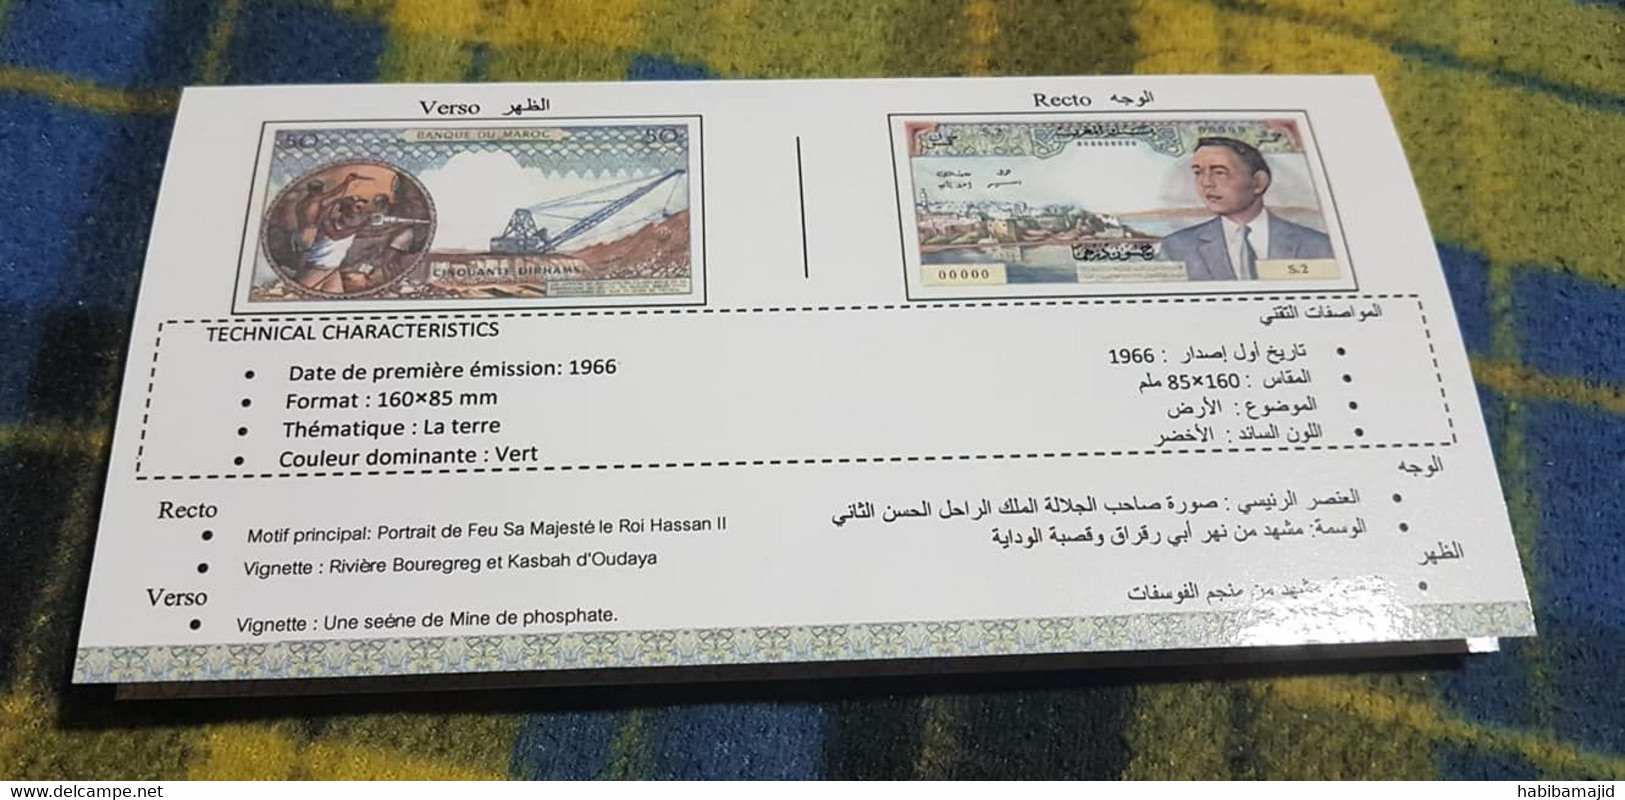 MAROC : Pochette (Vide) En Carton Pour Billet De 50 Dirhams 1968 - Marokko